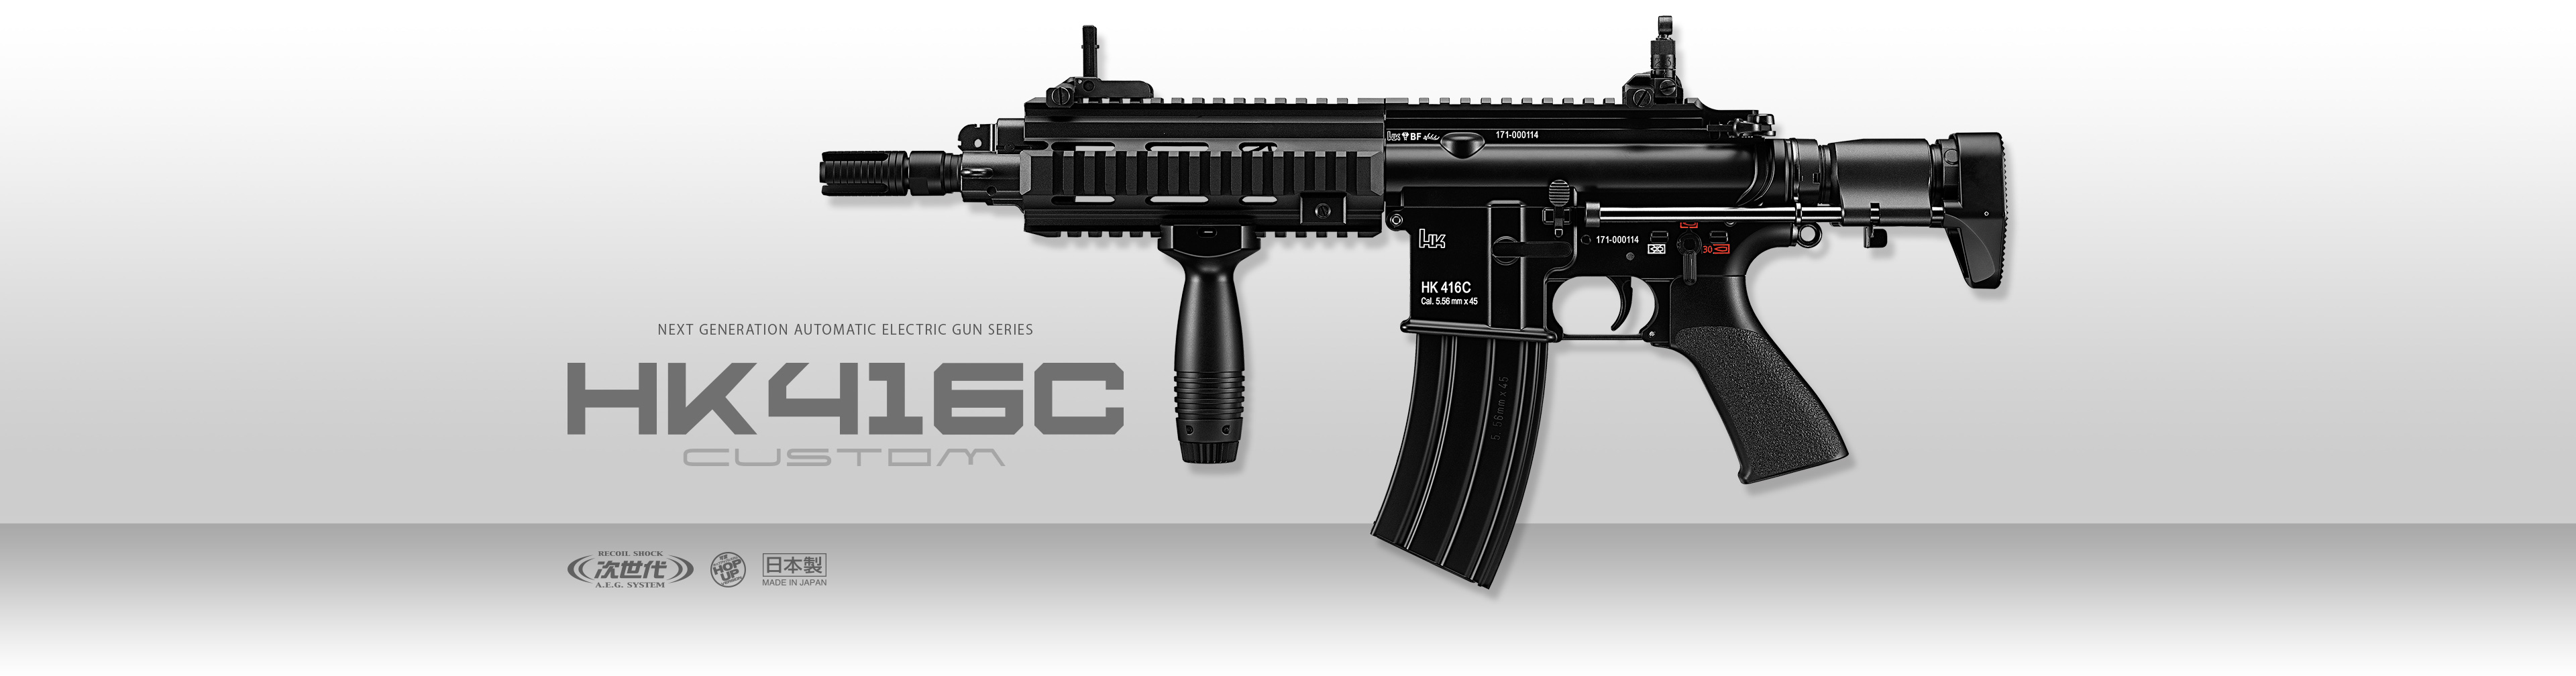 HK416C カスタム - 次世代電動ガン | 東京マルイ エアソフトガン情報サイト